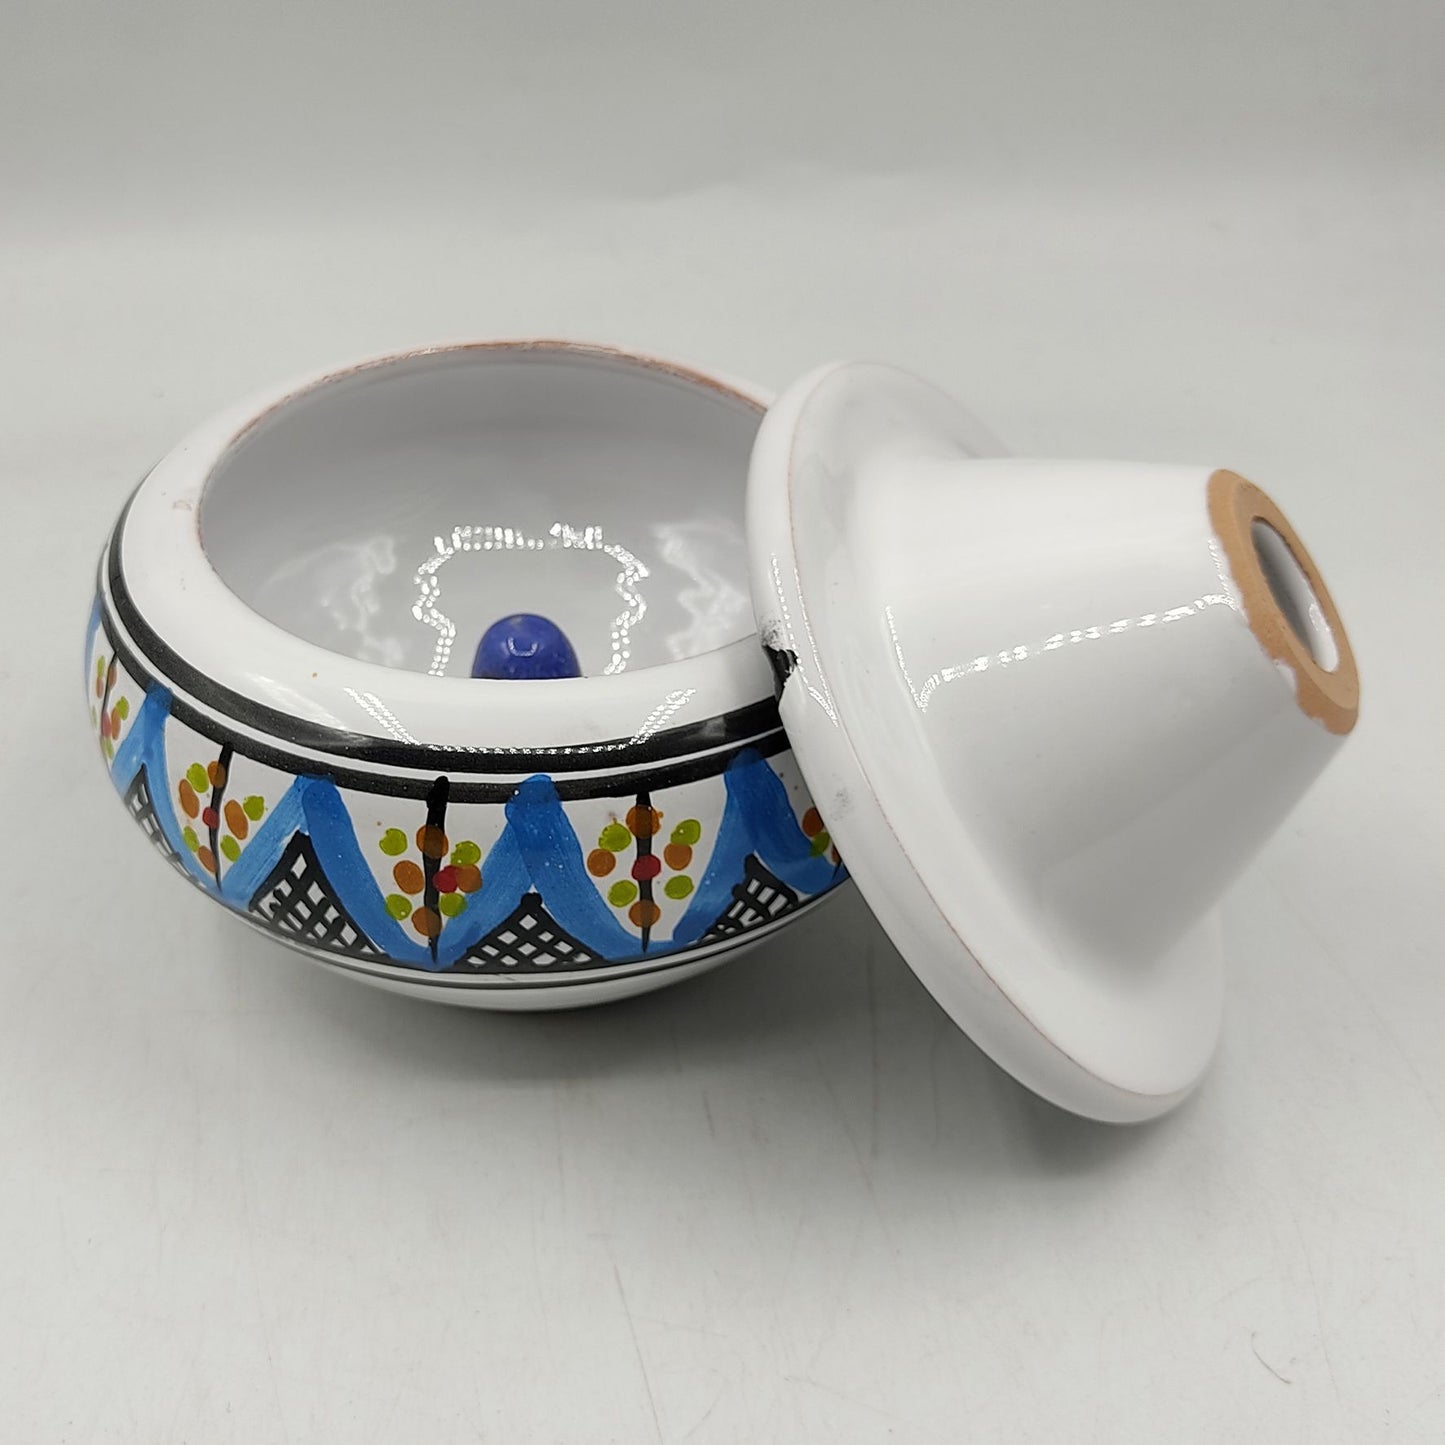 Etnico Arredo Posacenere Ceramica Antiodore Tunisina Marocchina 2007211104